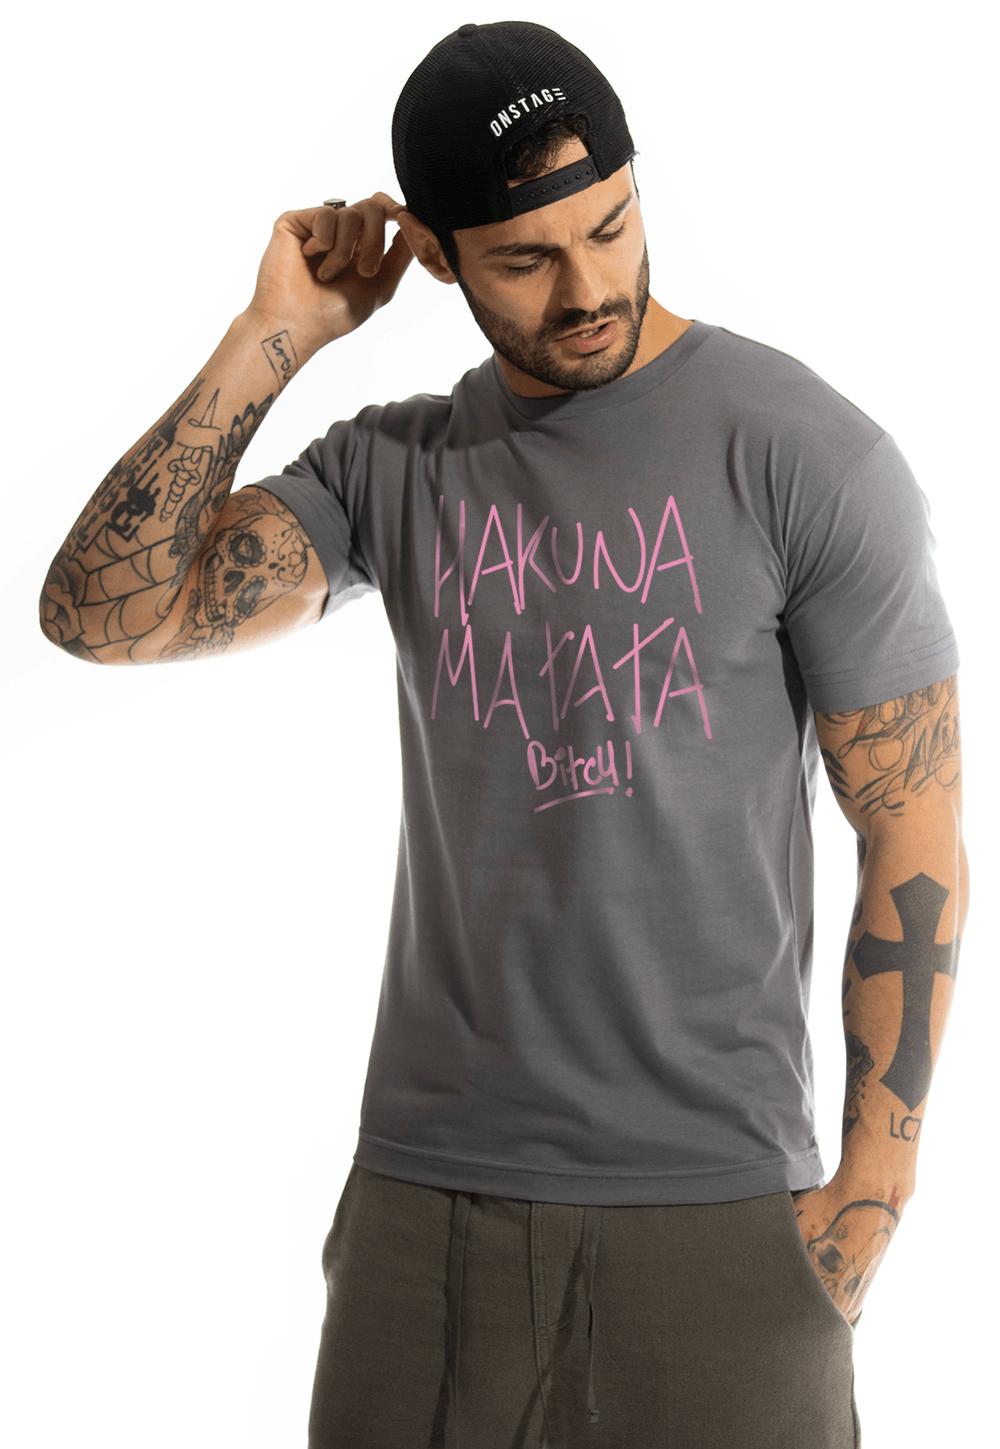 Camiseta Arimlap Hakuna Matata Cor:Chumbo;Tamanho:P;Genero:Masculino